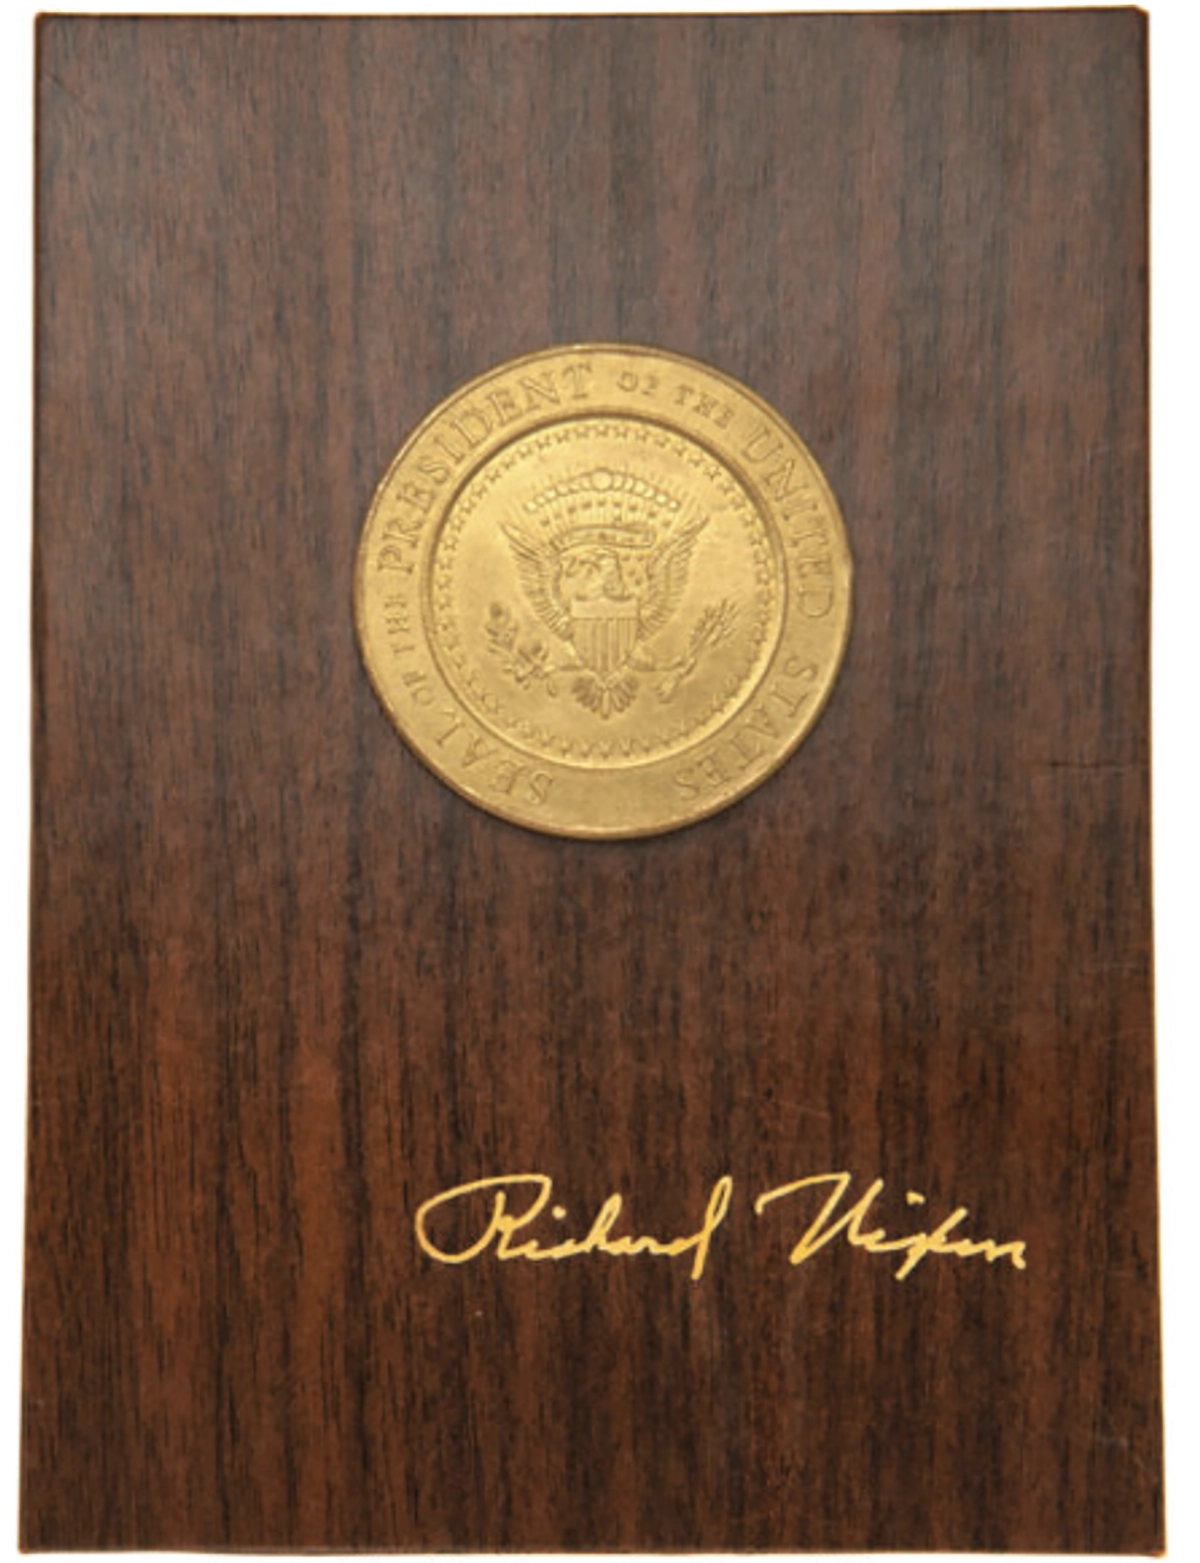 1971-S Eisenhower Dollar Nixon Presentation Box. Image: Heritage Auctions.